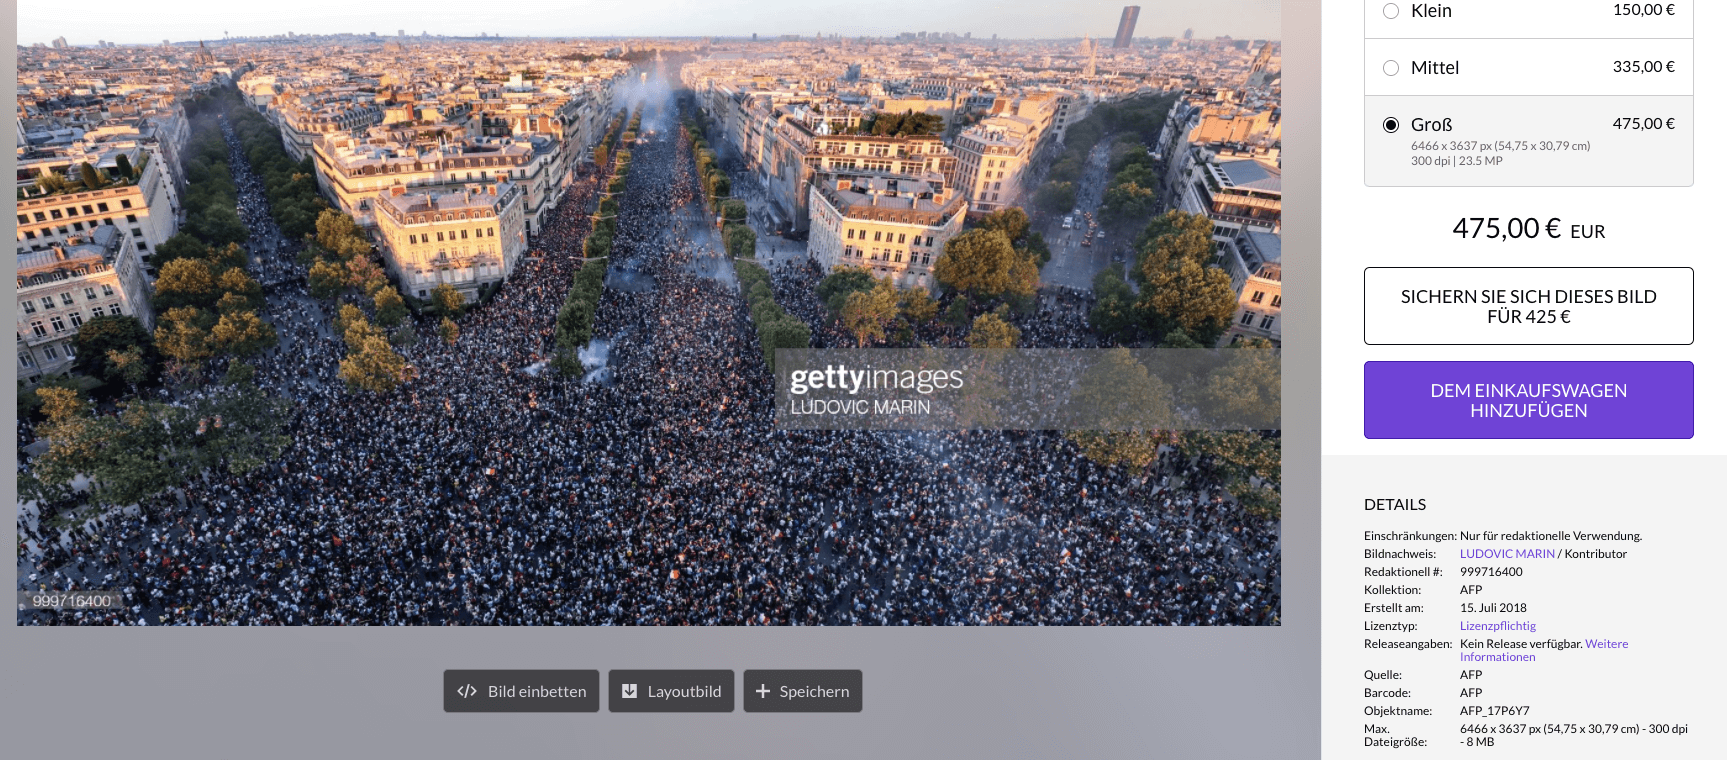 Fotos aus Paris von 2018